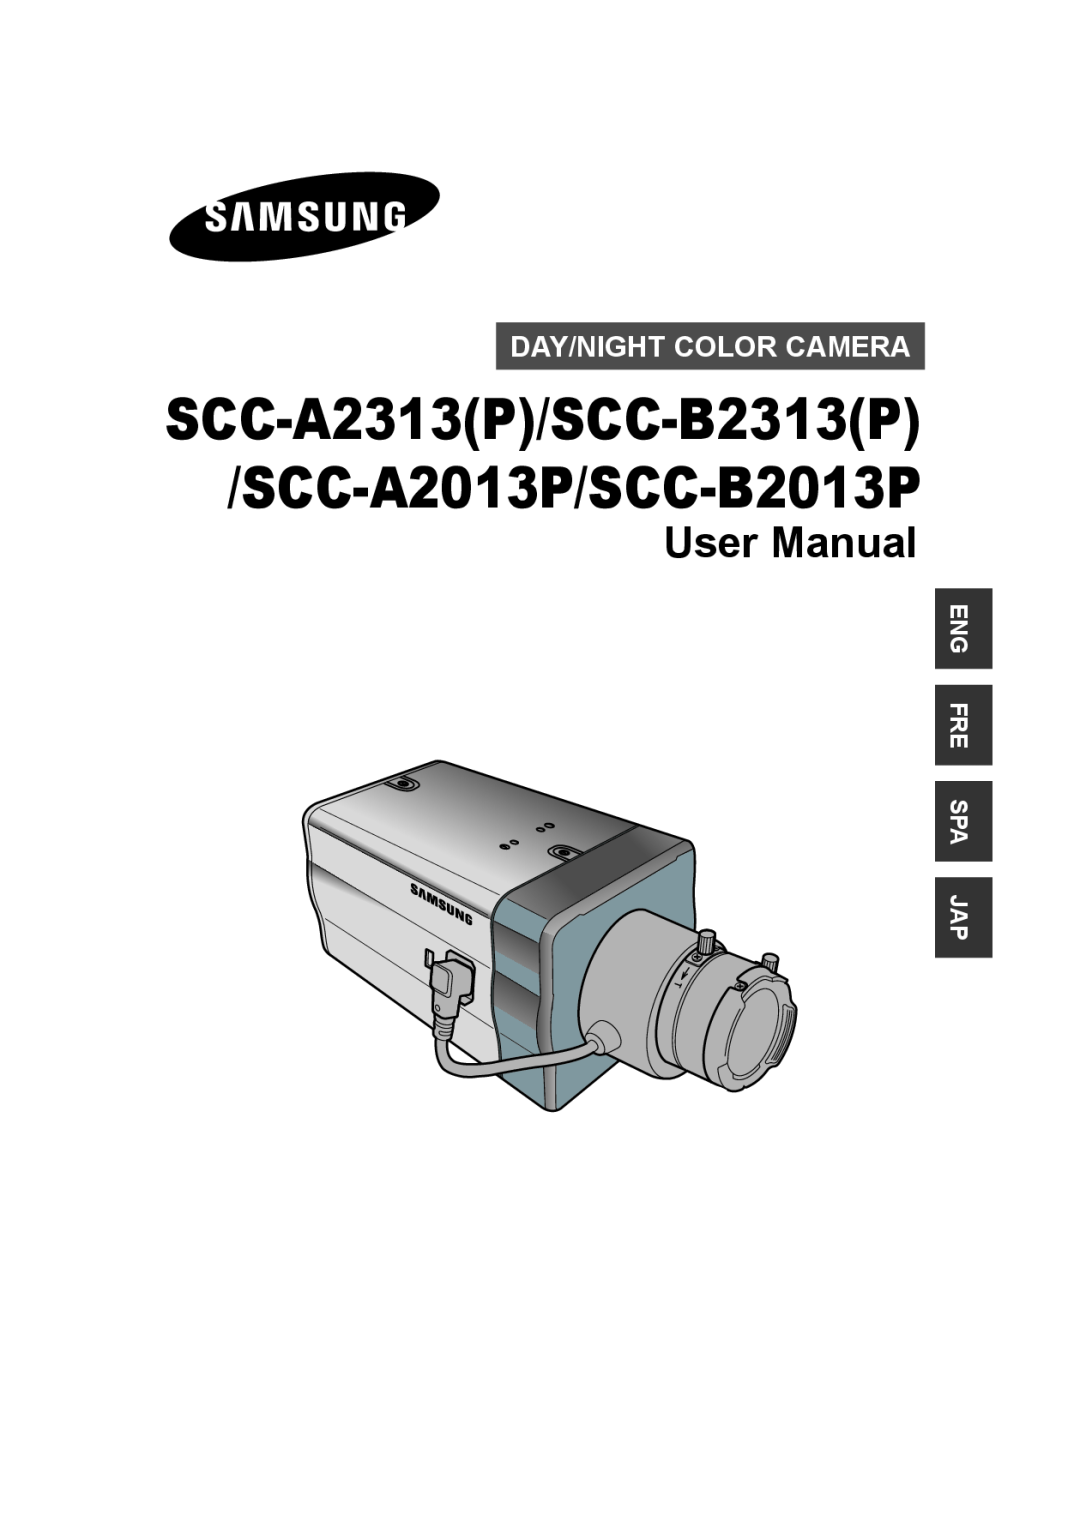 Samsung manual User Manual, Day/Night Color Camera, SCC-A2313P/SCC-B2313P /SCC-A2013P/SCC-B2013P, Eng Fre Spa Jap 